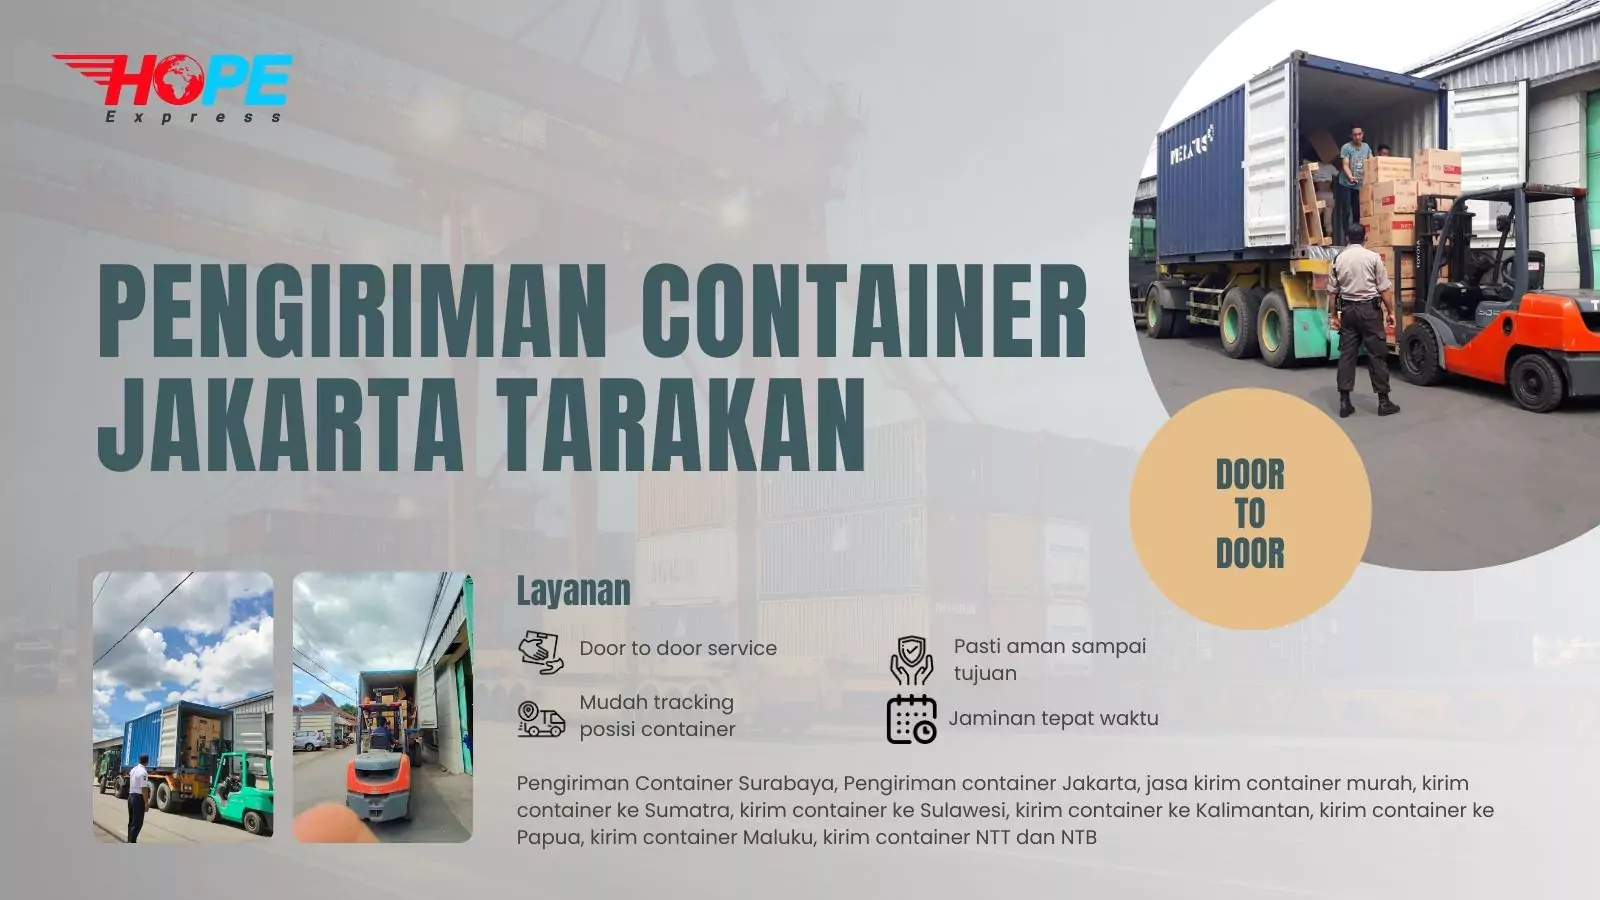 Pengiriman Container Jakarta Tarakan